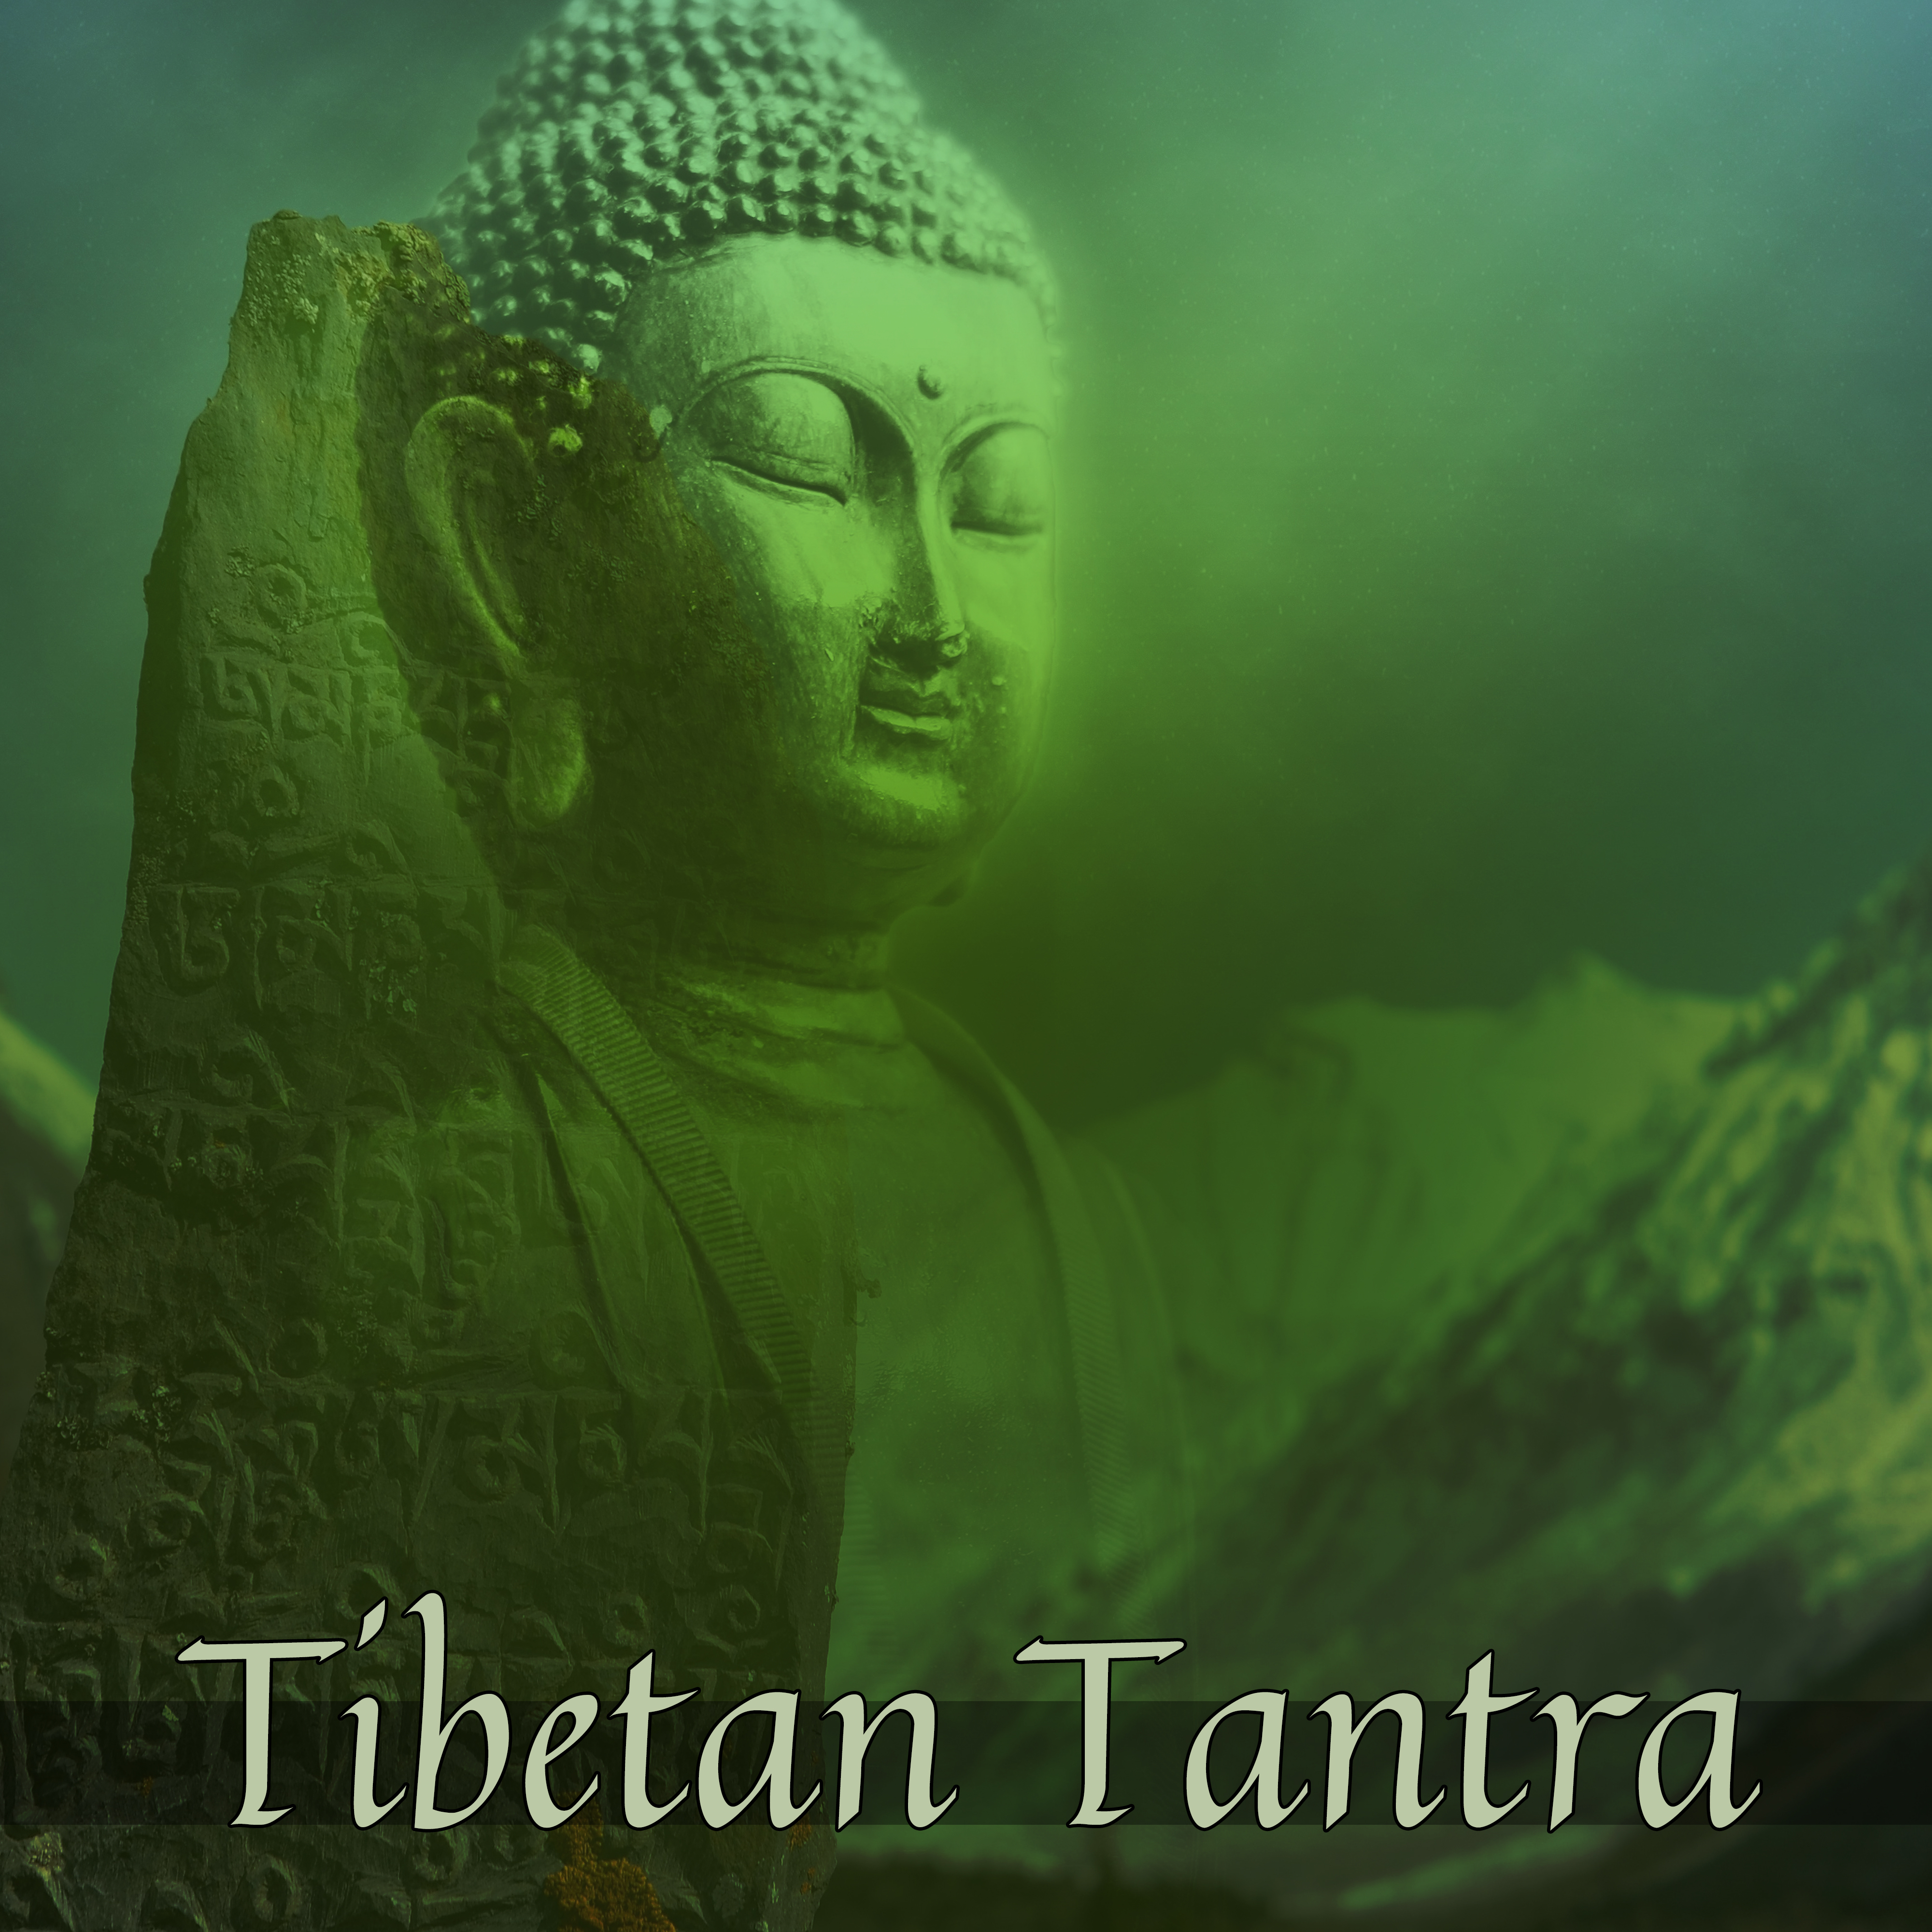 Tibetan Tantra – Spiritual Sounds of Nature, Tantra Music, Sexy Power, Meditation Songs, Healing Yoga, Relax, Yoga Music